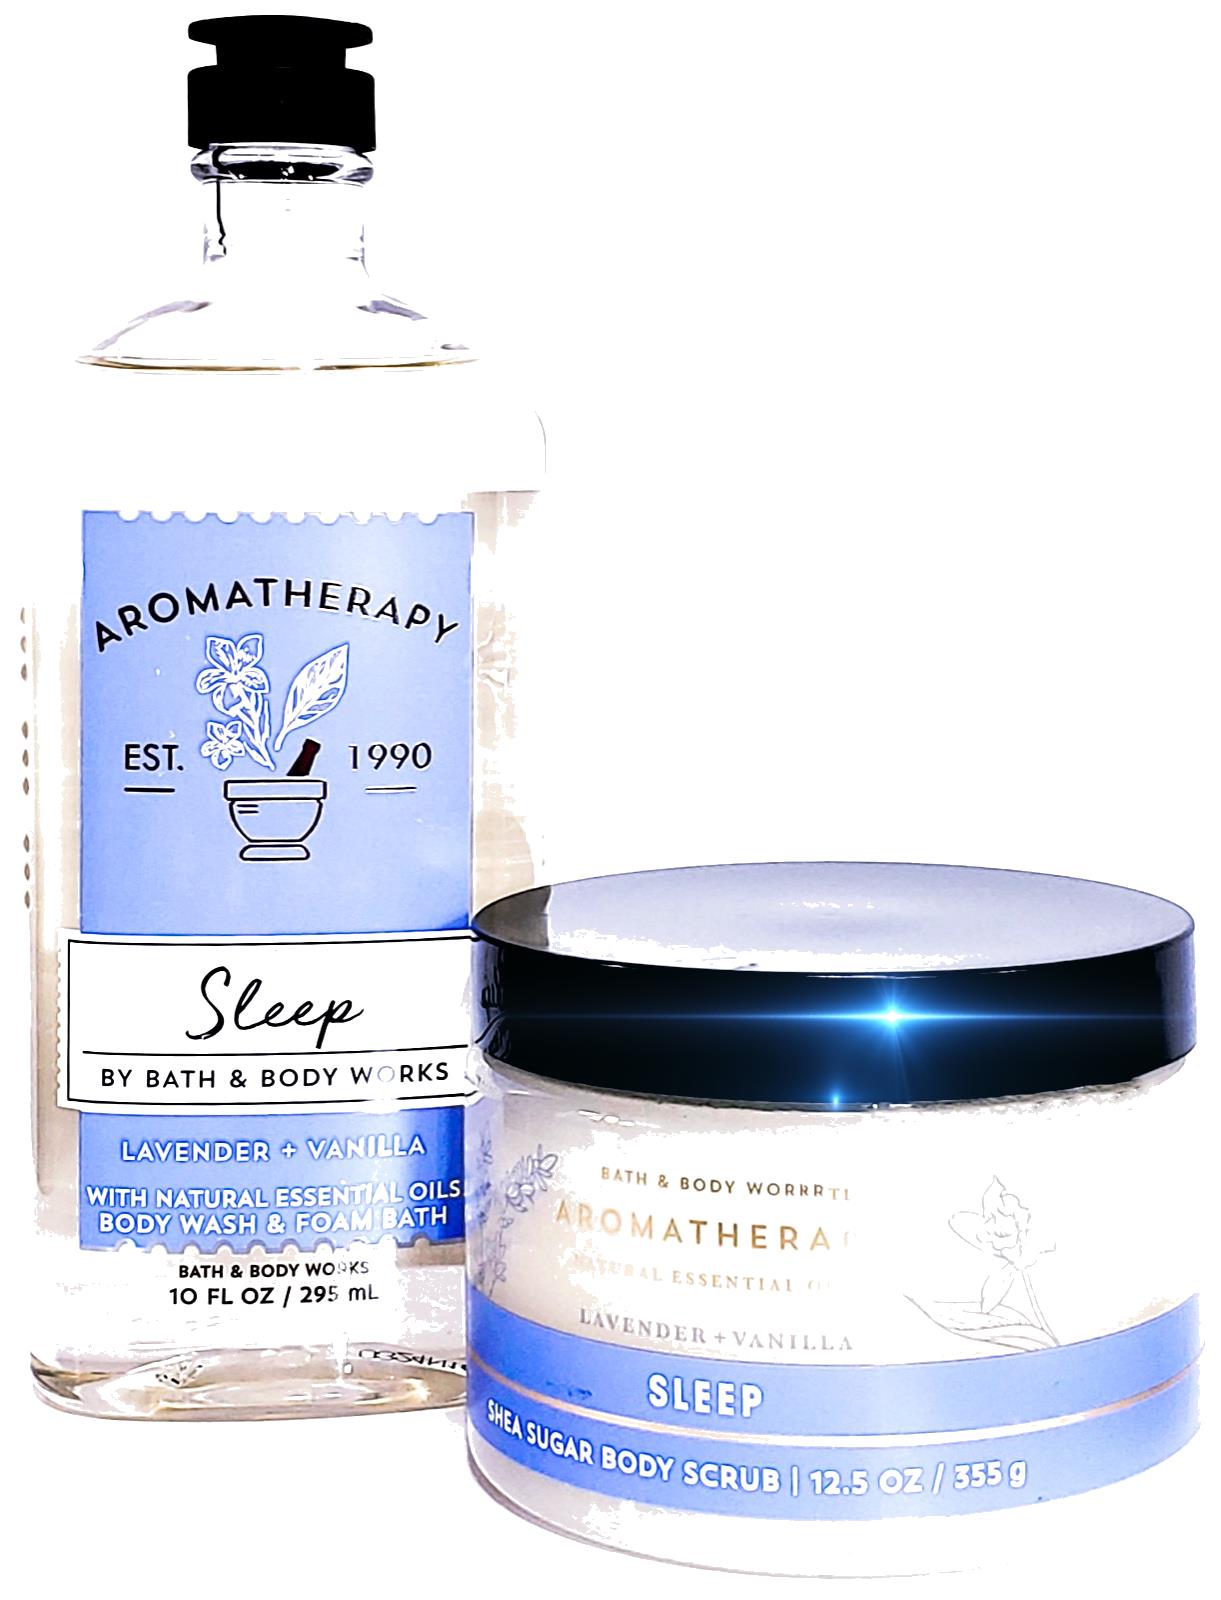 LAVENDER VANILLA Bath Body Works Aromatherapy 3 Pc Set Body Wash Cream  Spray NEW